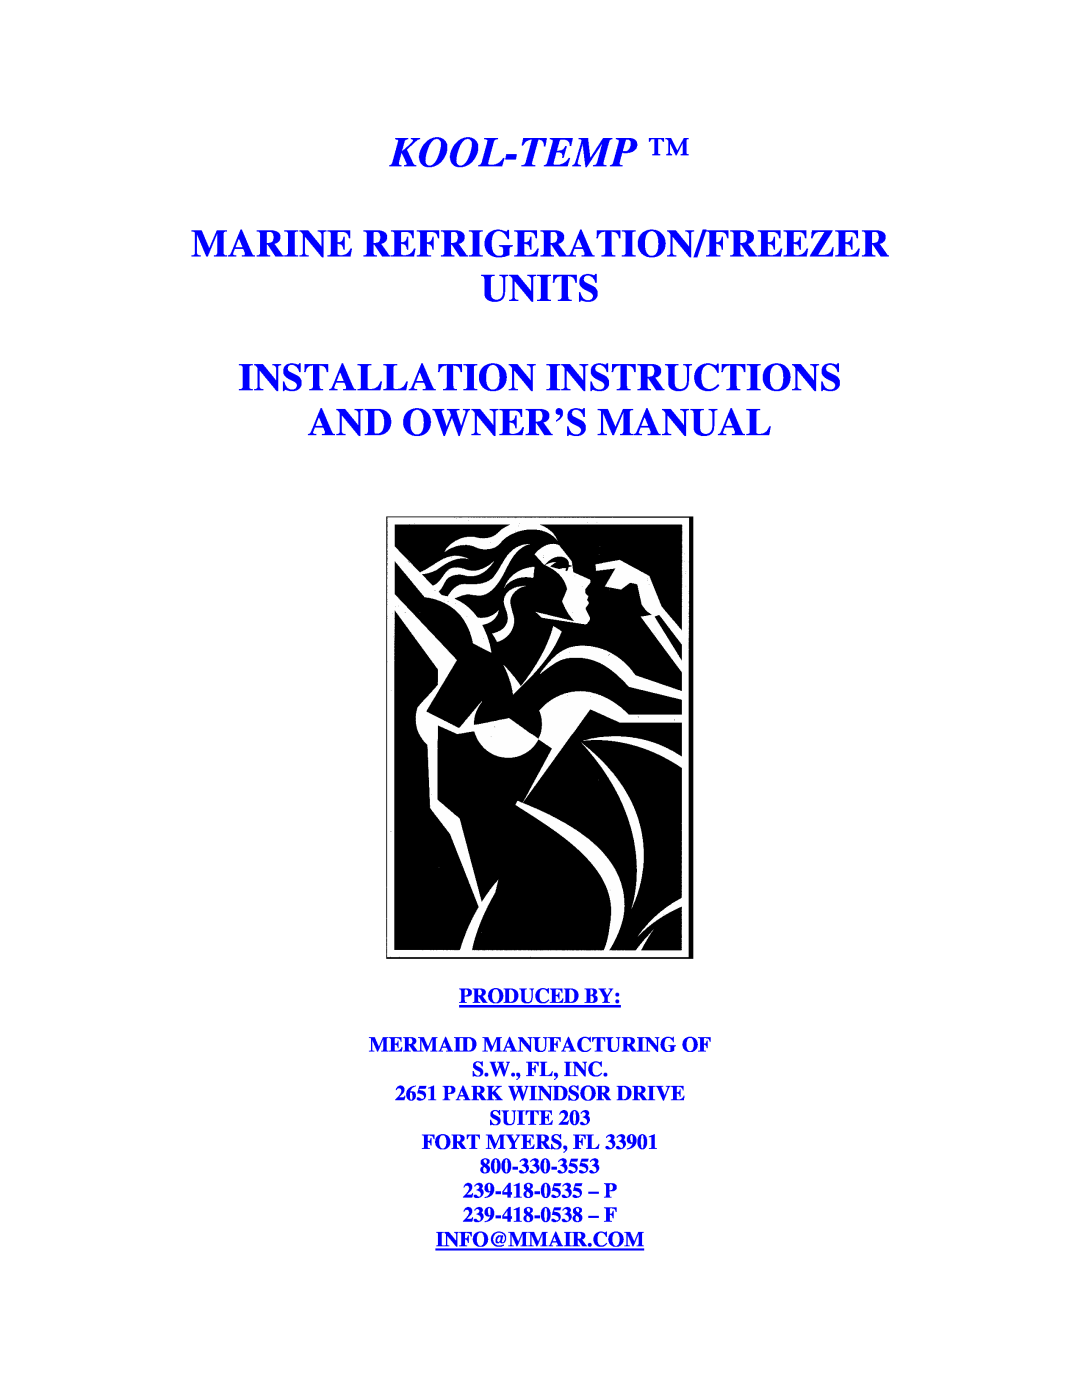 Mermaid REFRIGERATION/FREEZER installation instructions Kool-Temp, Marine Refrigeration/Freezer Units, F Info@Mmair.Com 